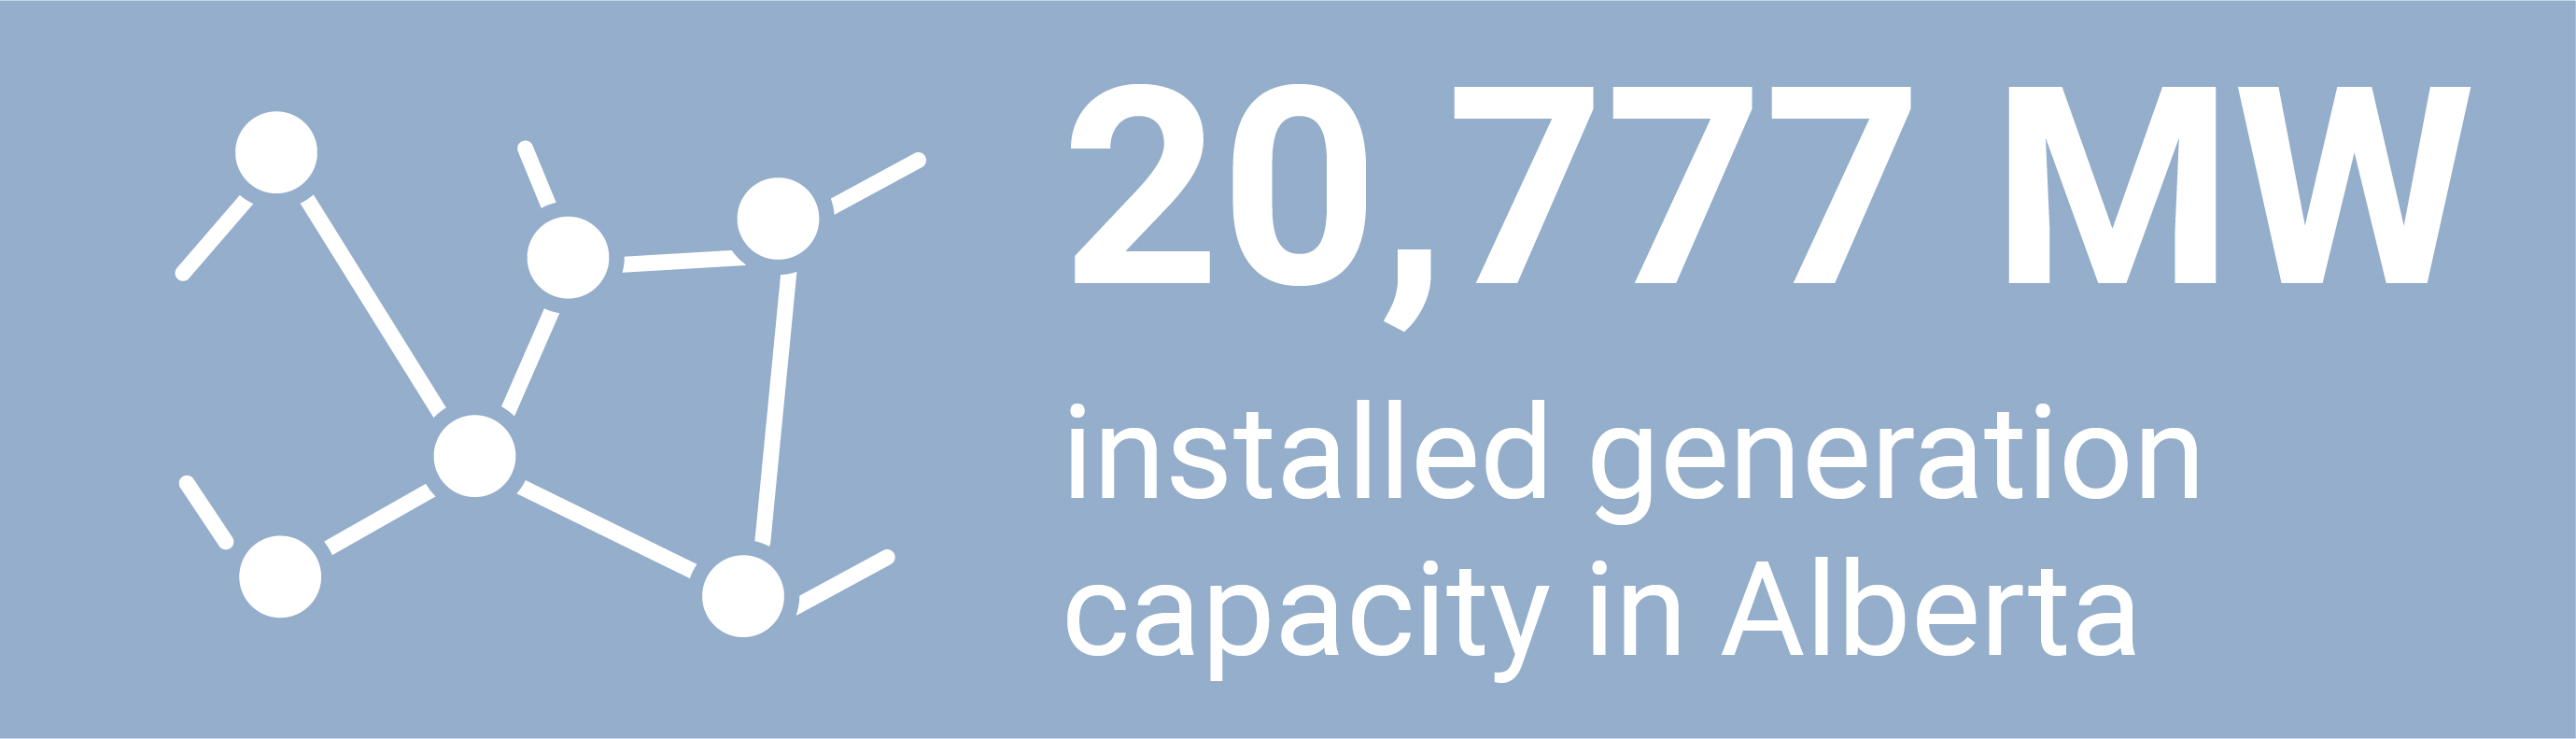 18,334MW installed generation - March 2023